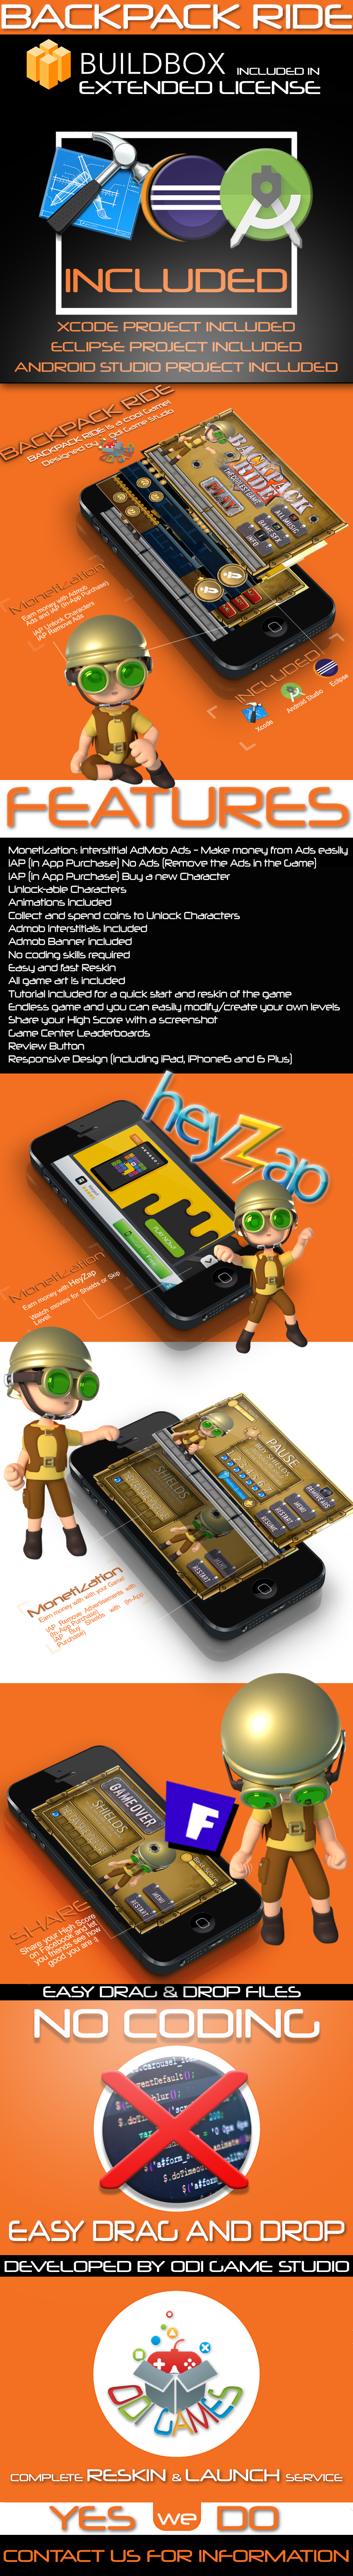 BackPack Ride - iOS - Android - iAP + ADMOB + Leaderboards + HeyZap - 2